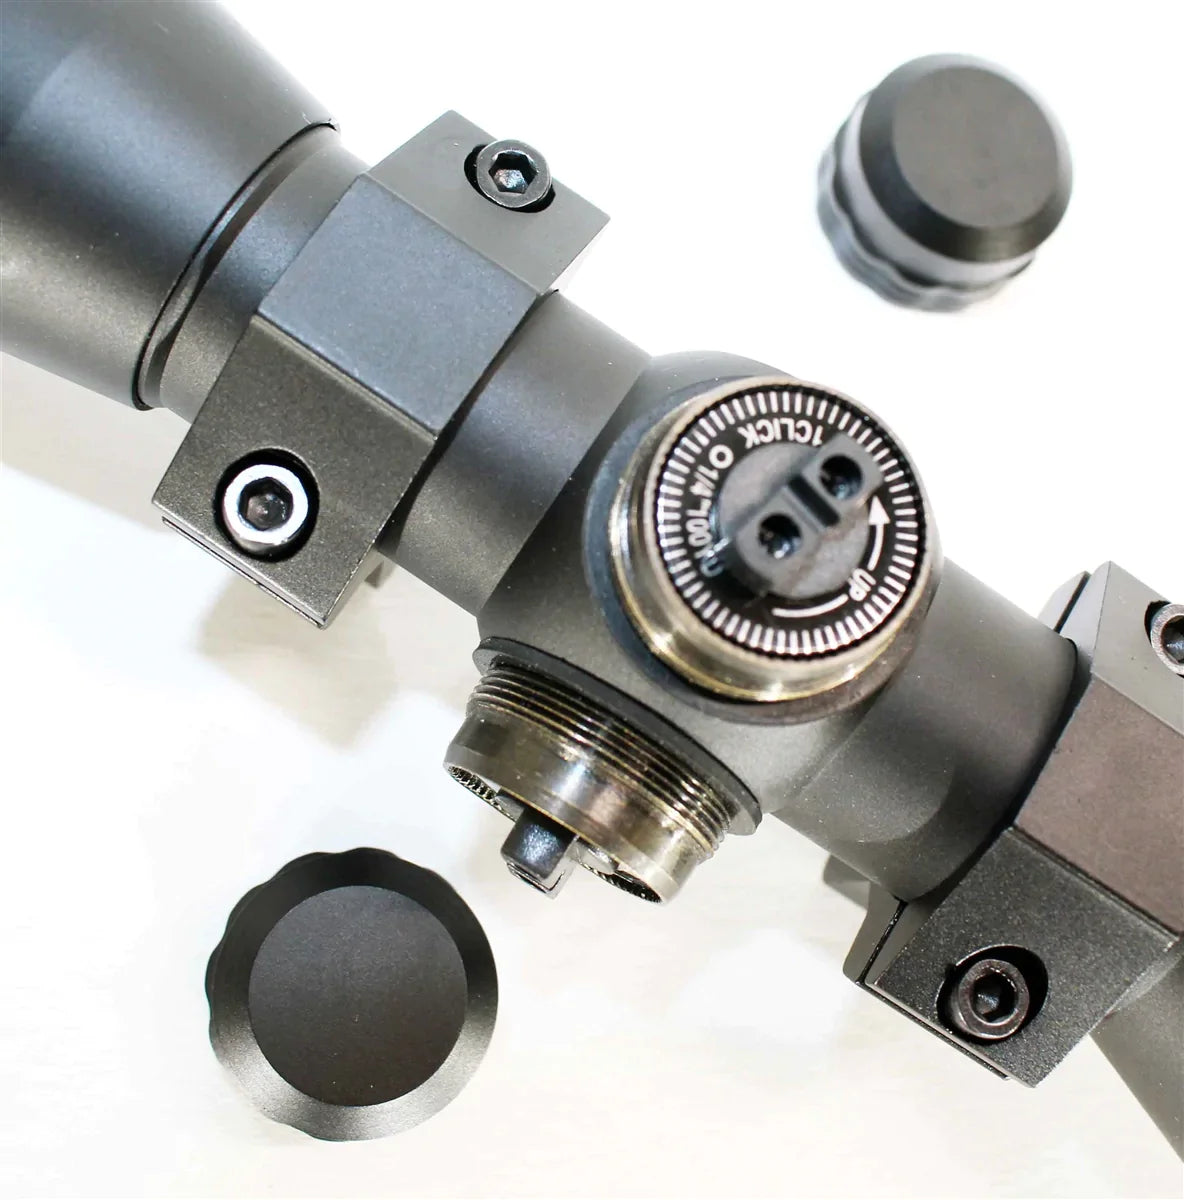 4x32 scope for crosman 760 pumpmaster.